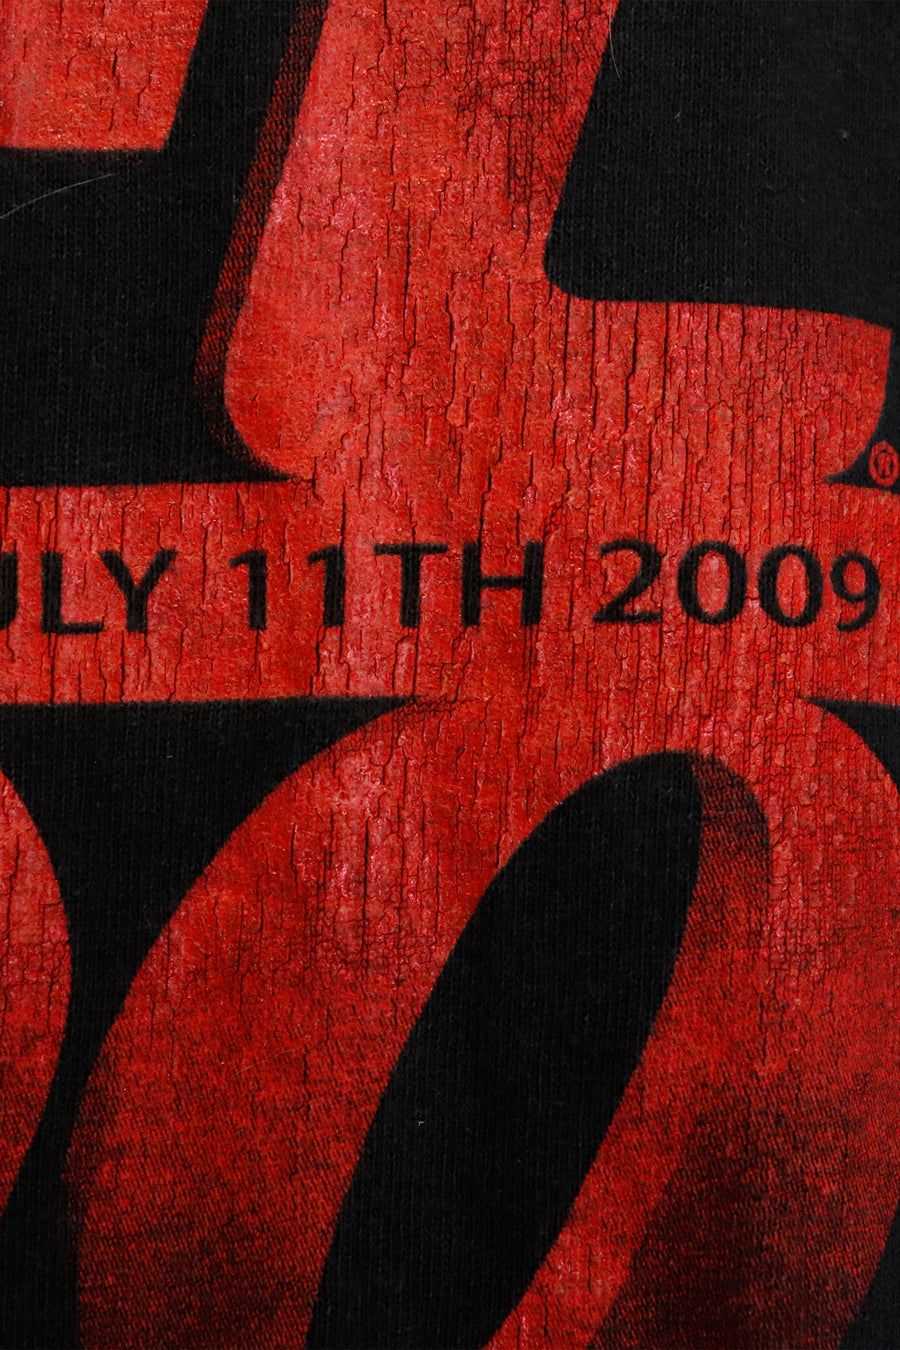 Vintage 2009 UFC Making History July 11th T Shirt Sz 2XL